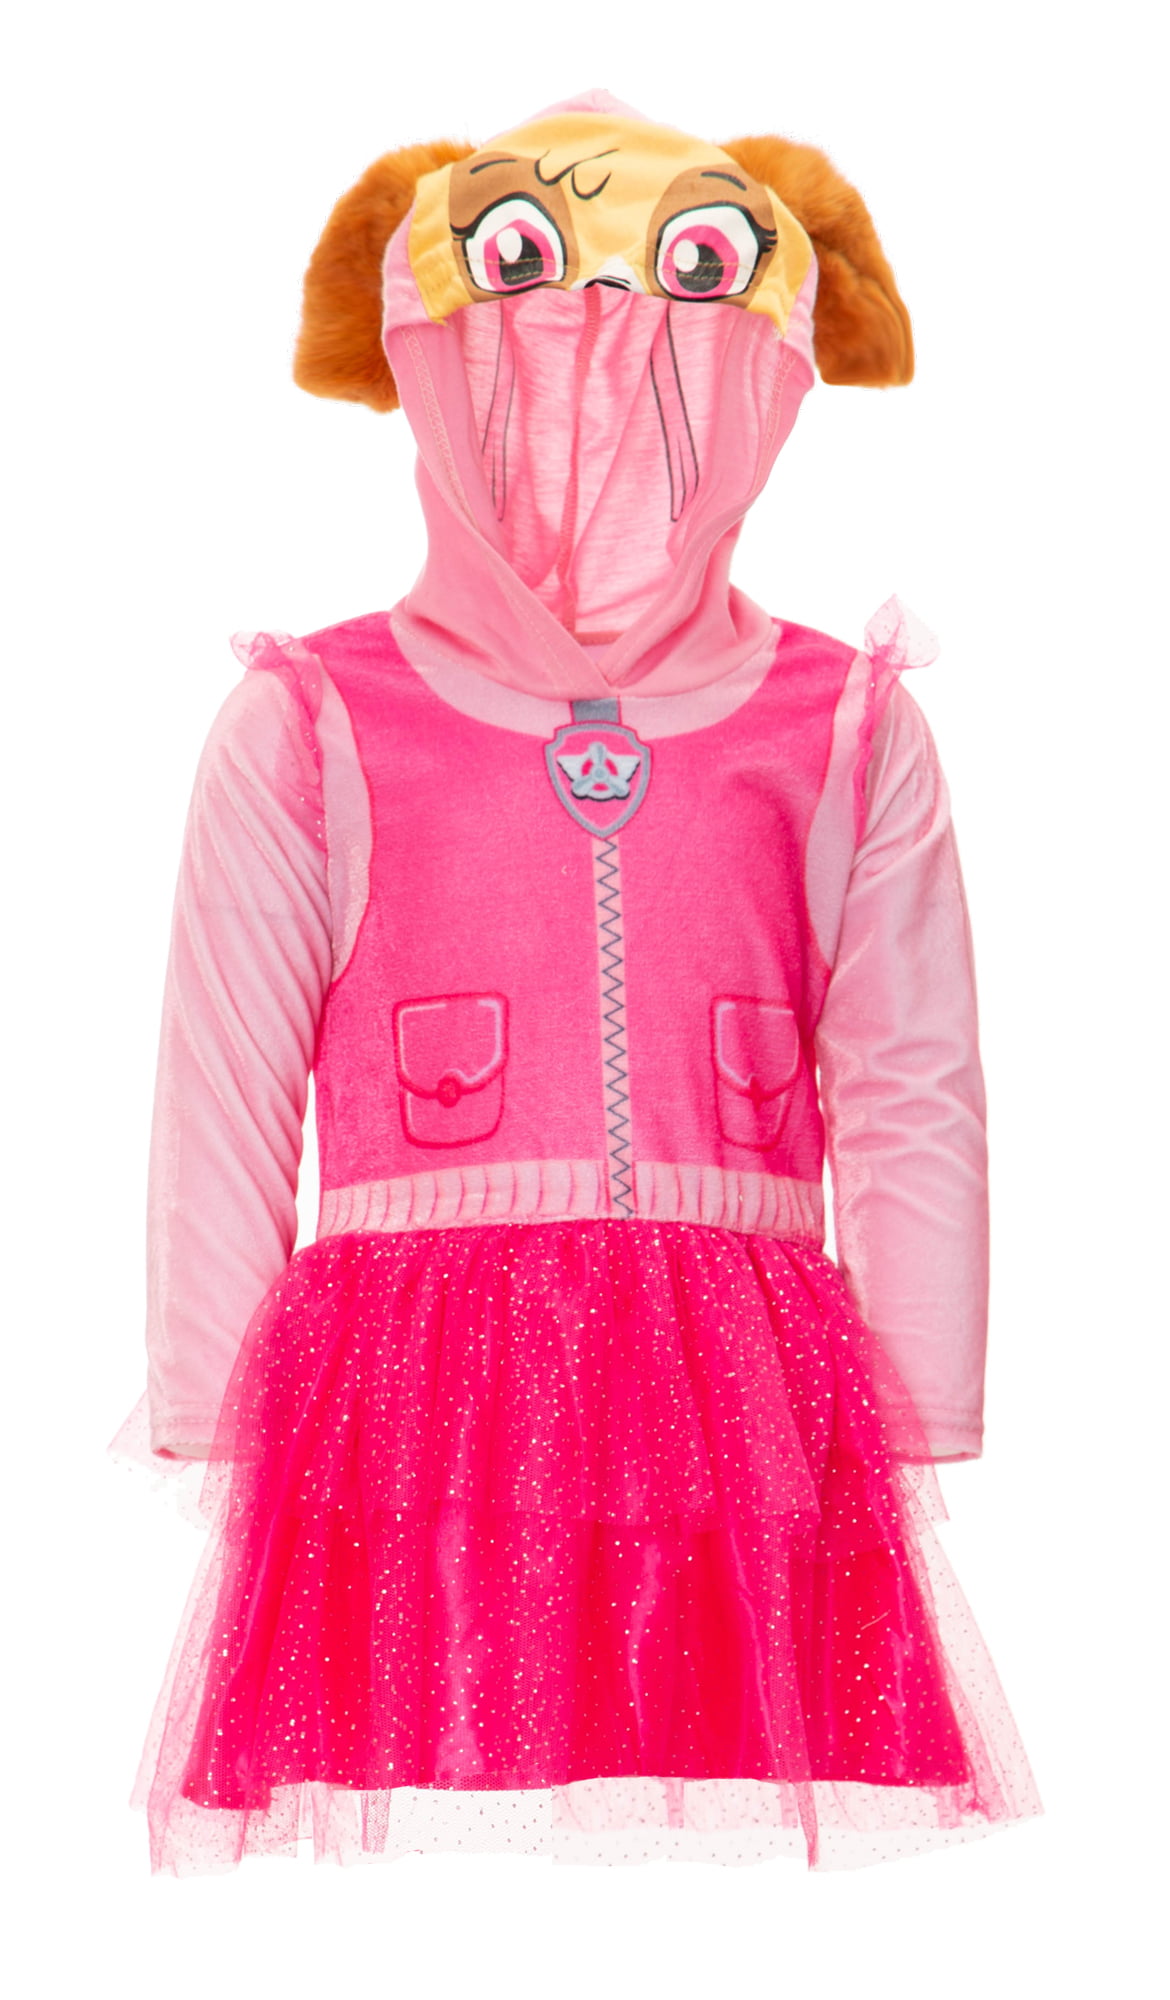 Nickelodeon - Nickelodeon Paw Patrol Toddler Girl Hooded Costume Dress Leggings Set Pink - Walmart.com - Walmart.com